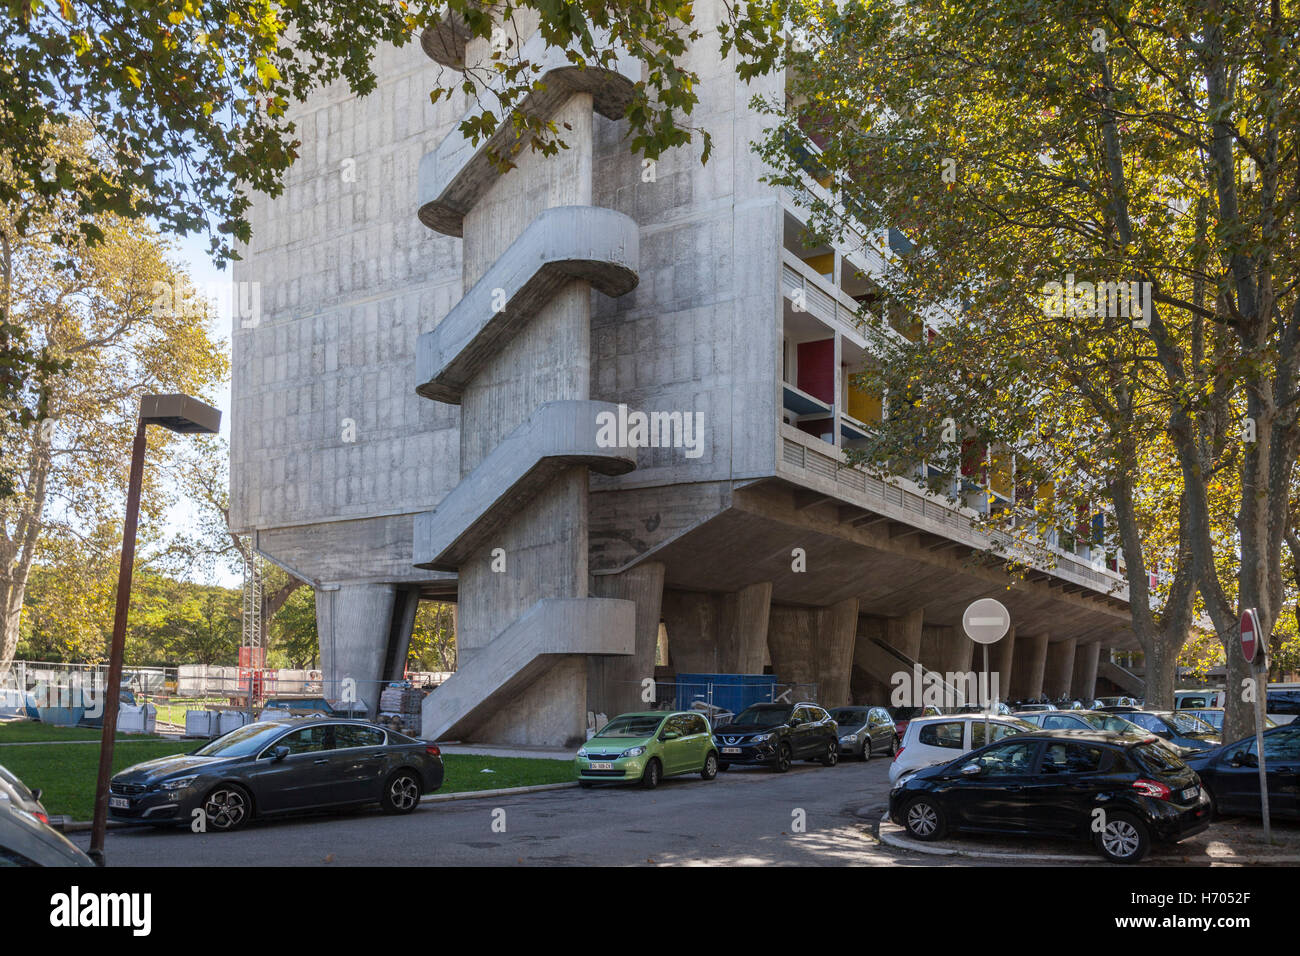 Art work at Unite D'habitation, Marseille, France, Architect: Le Corbusier, 1952 Stock Photo